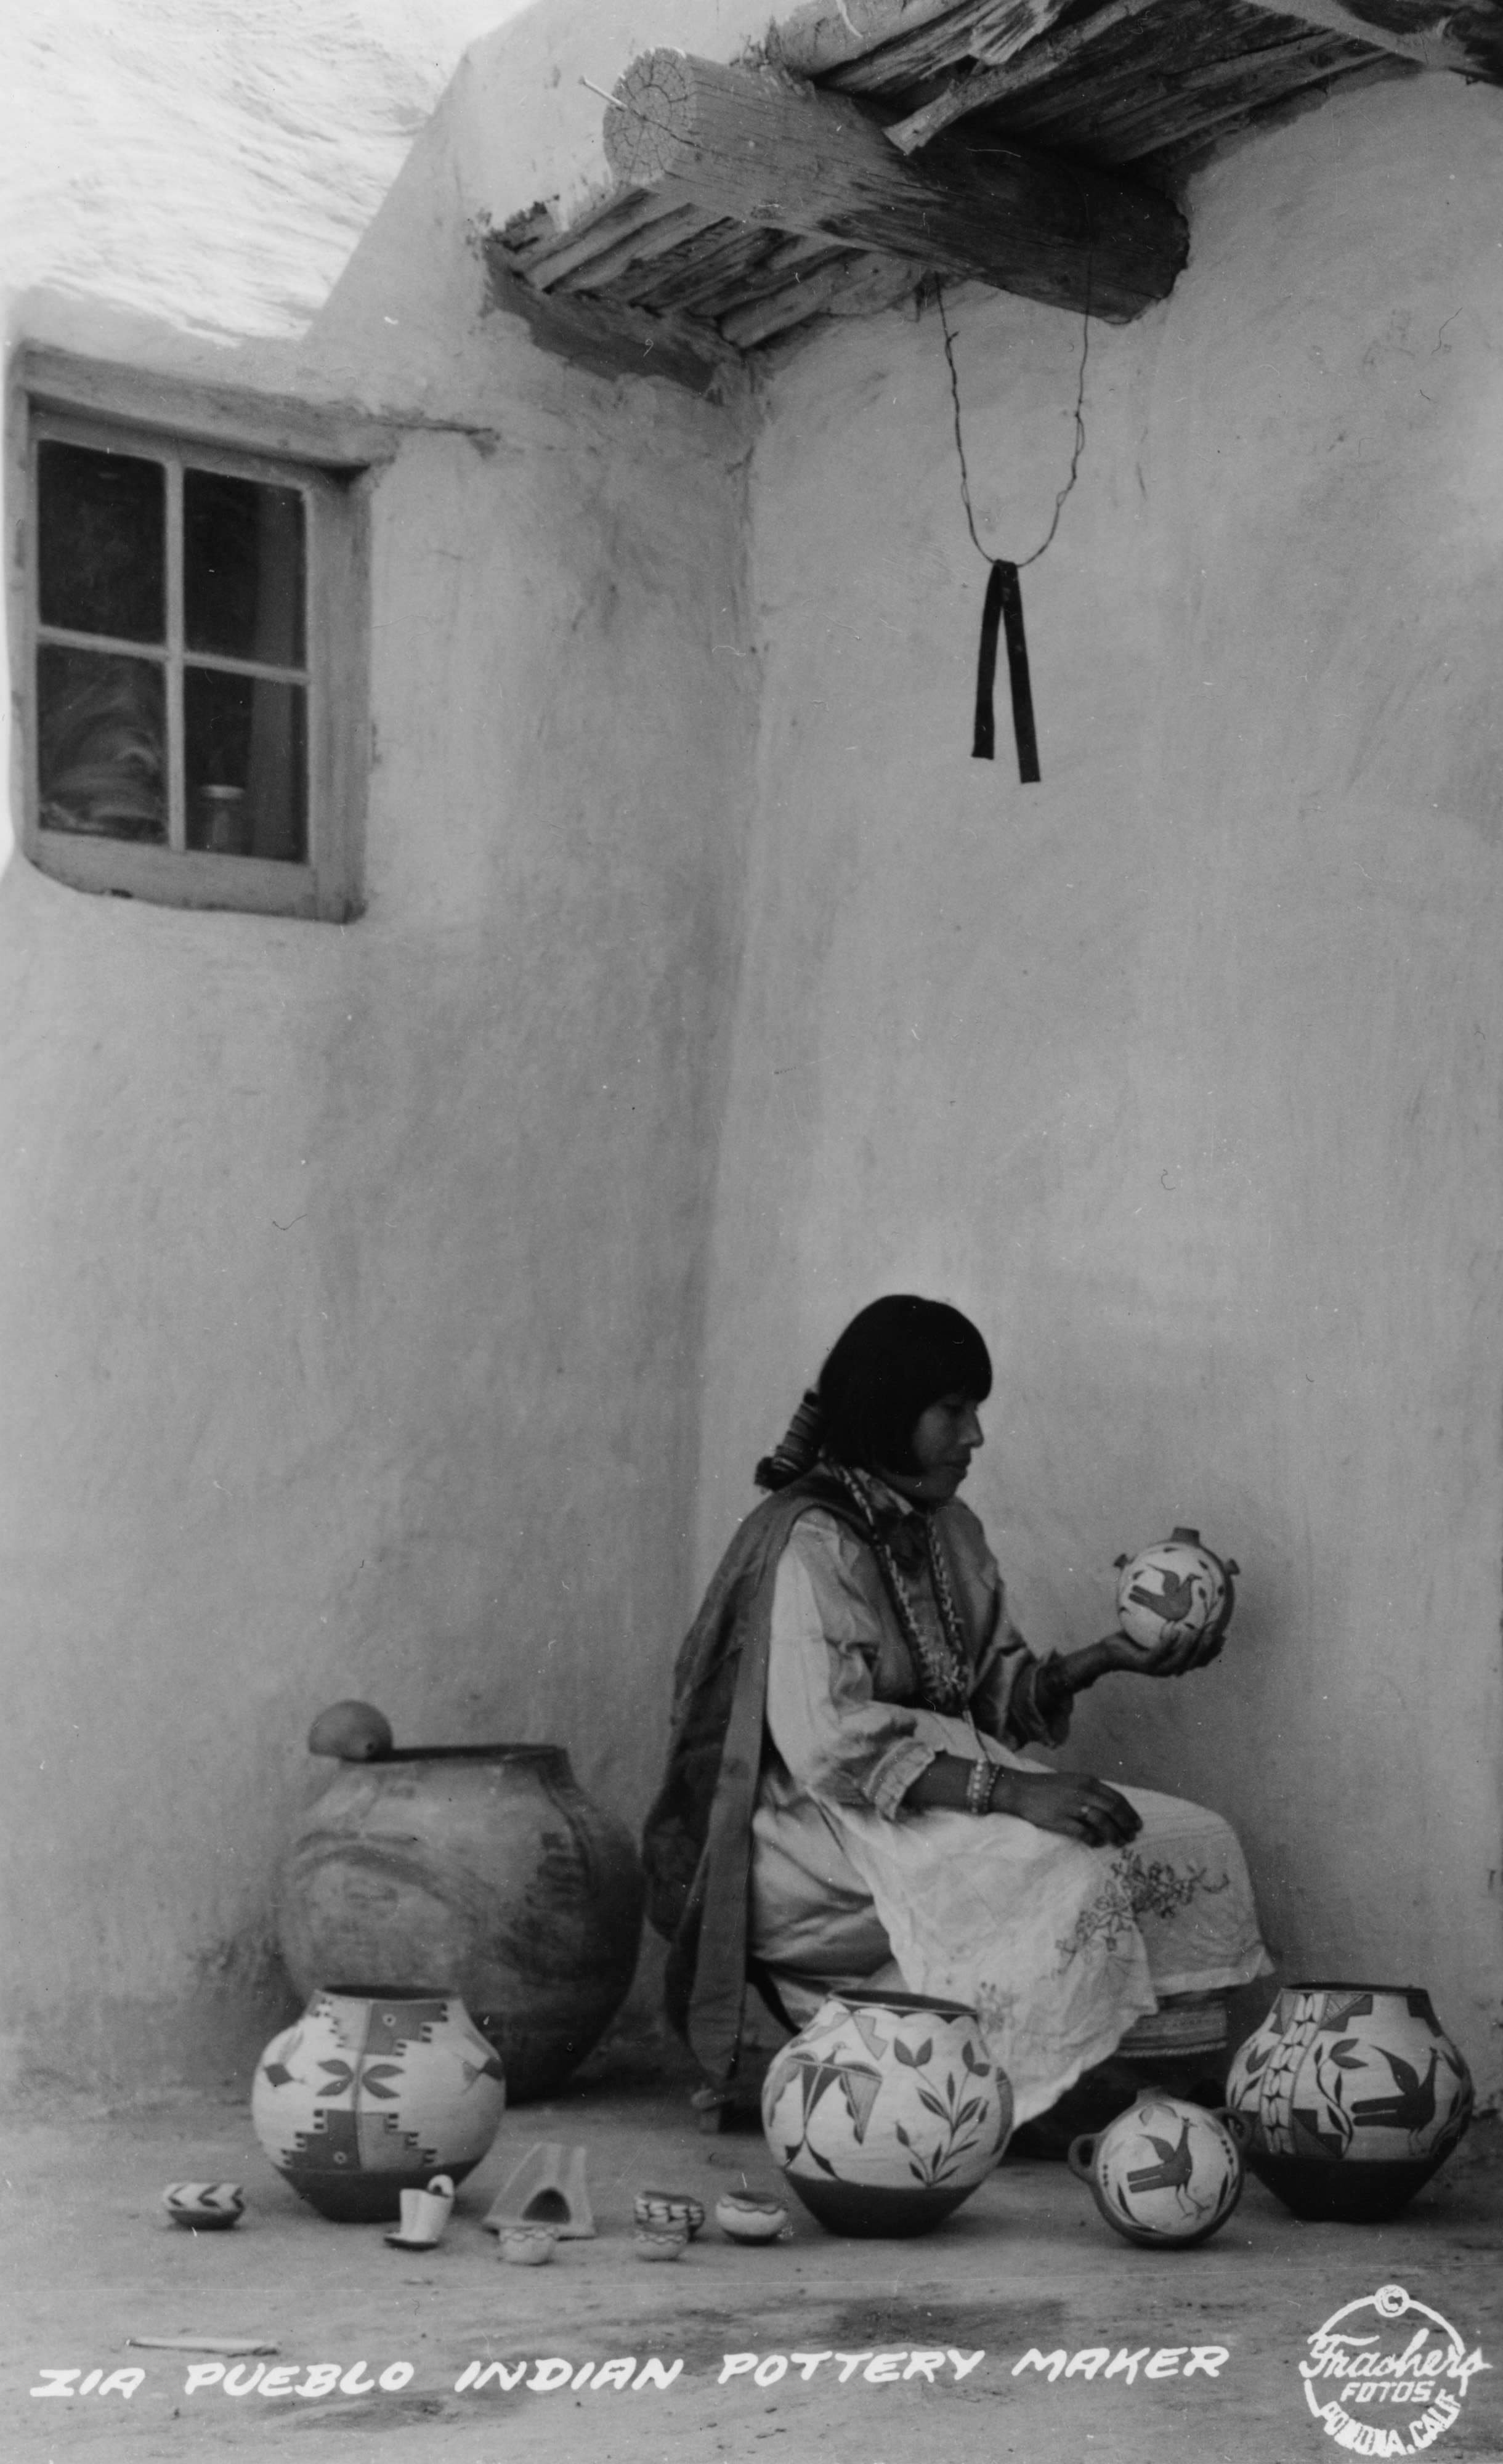 Image:  Zia Pueblo Potter Harviana Pino Toribio. "Zia Pueblo Indian Pottery Maker." Photograph by Frasher, Pomona, California, ca. 1935, courtesy Palace of the Governors (NMHM/DCA) neg. no. 47954.